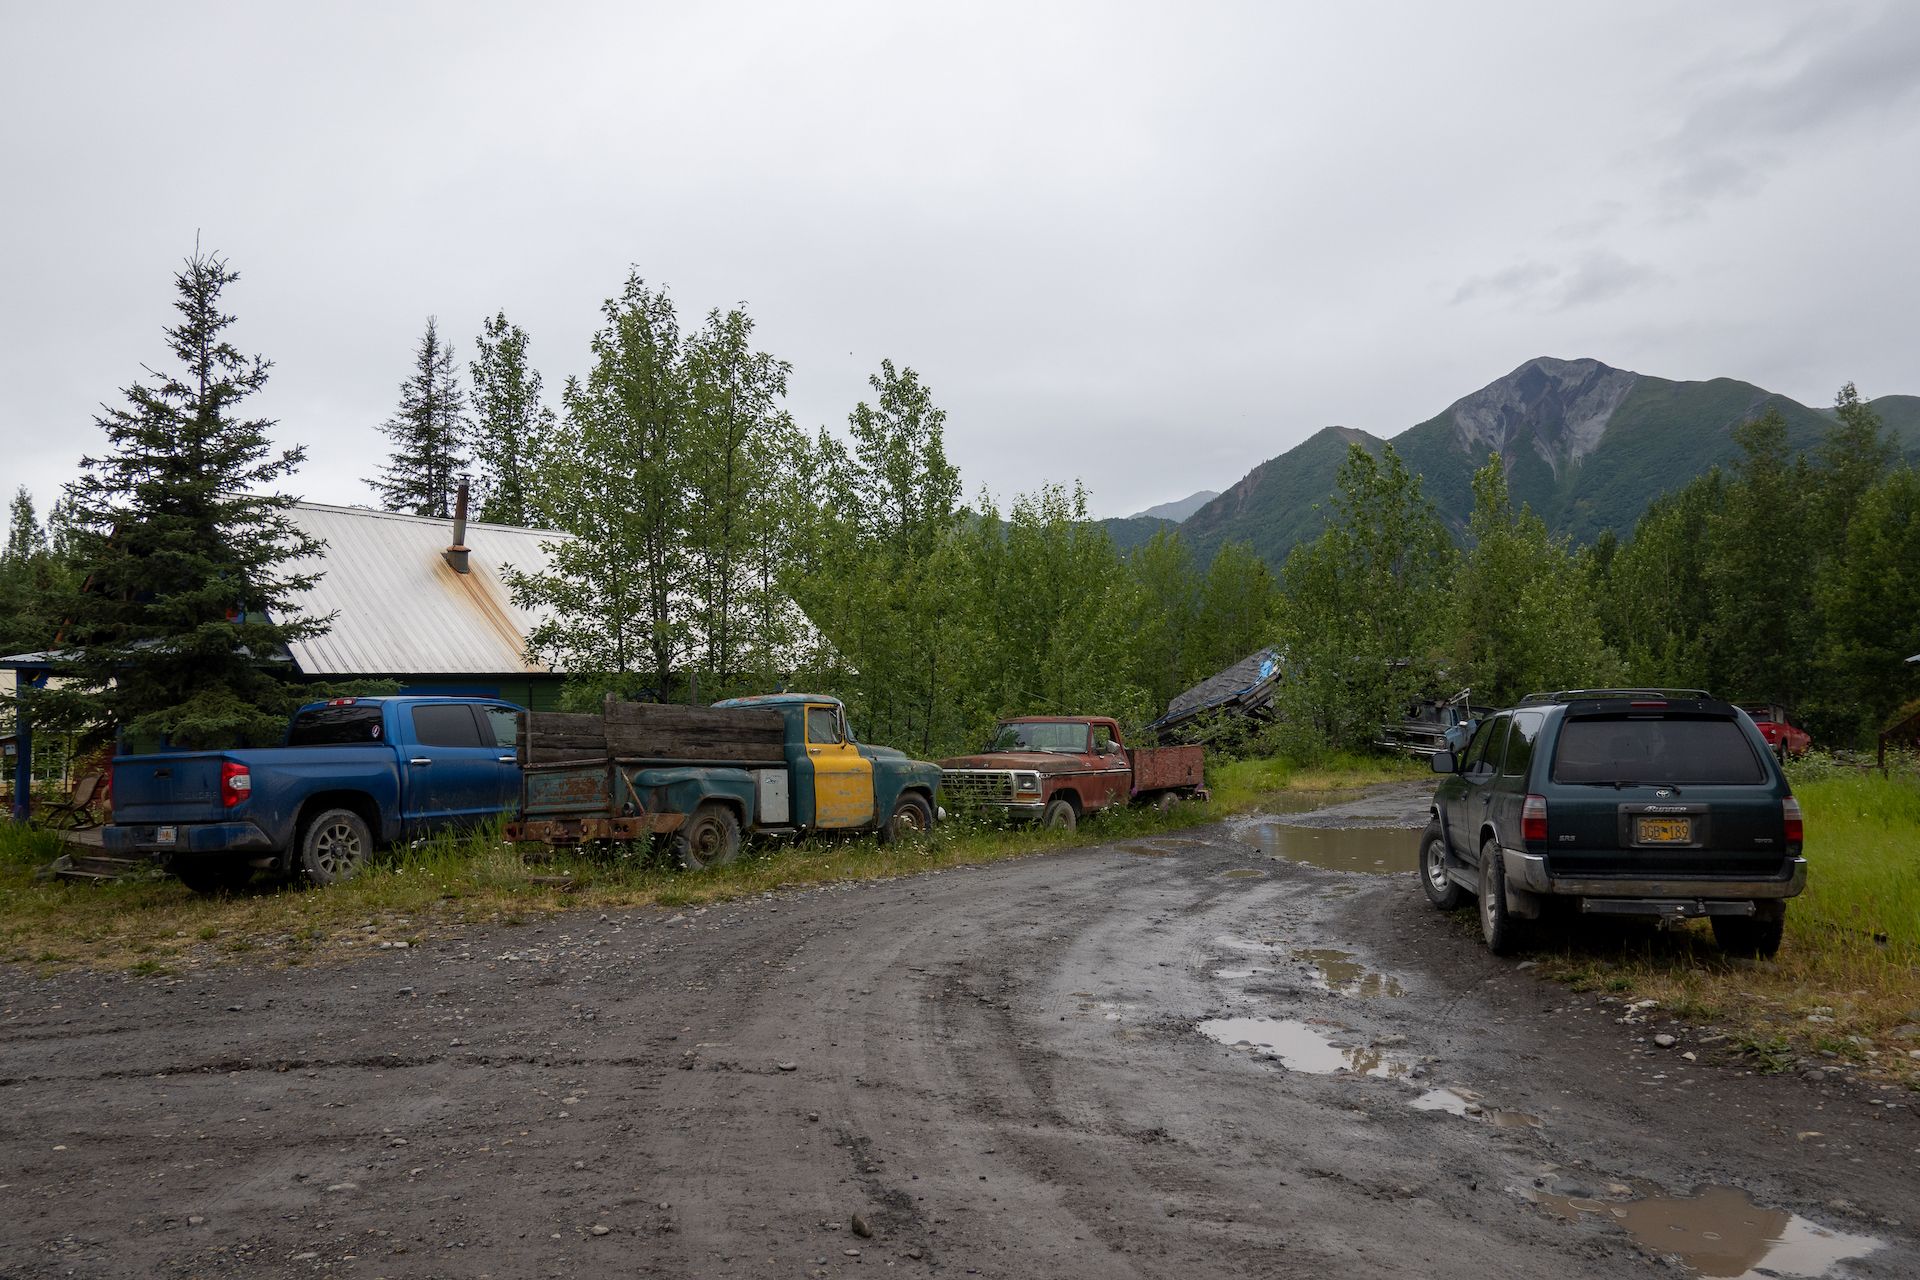 A remote Alaskan town in full glory